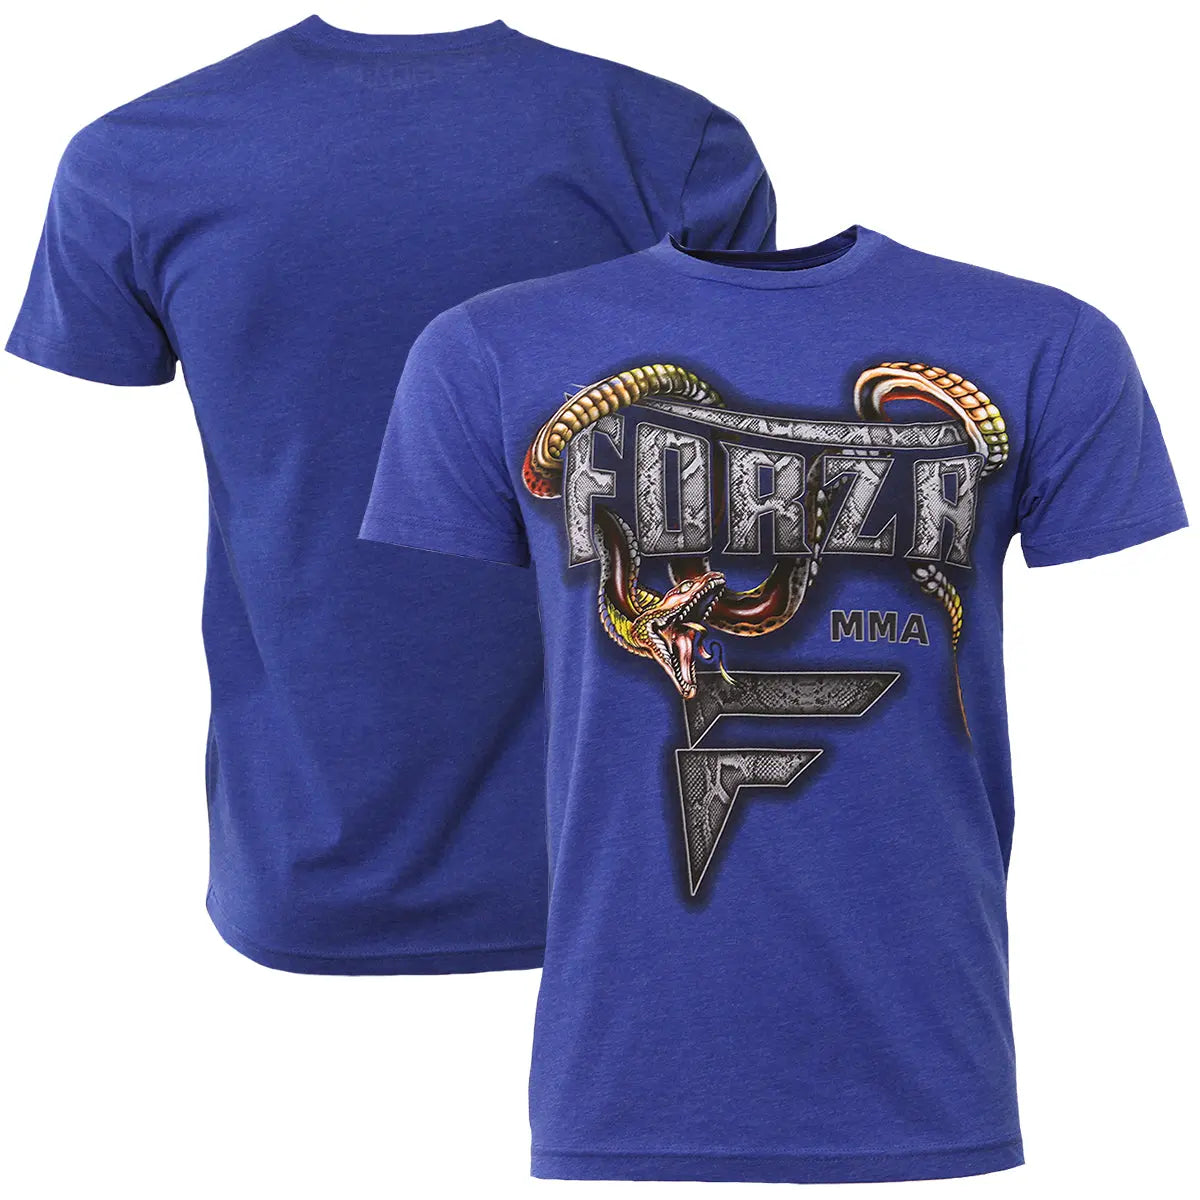 Forza Sports "Slither" MMA T-Shirt - Royal Blue Forza Sports